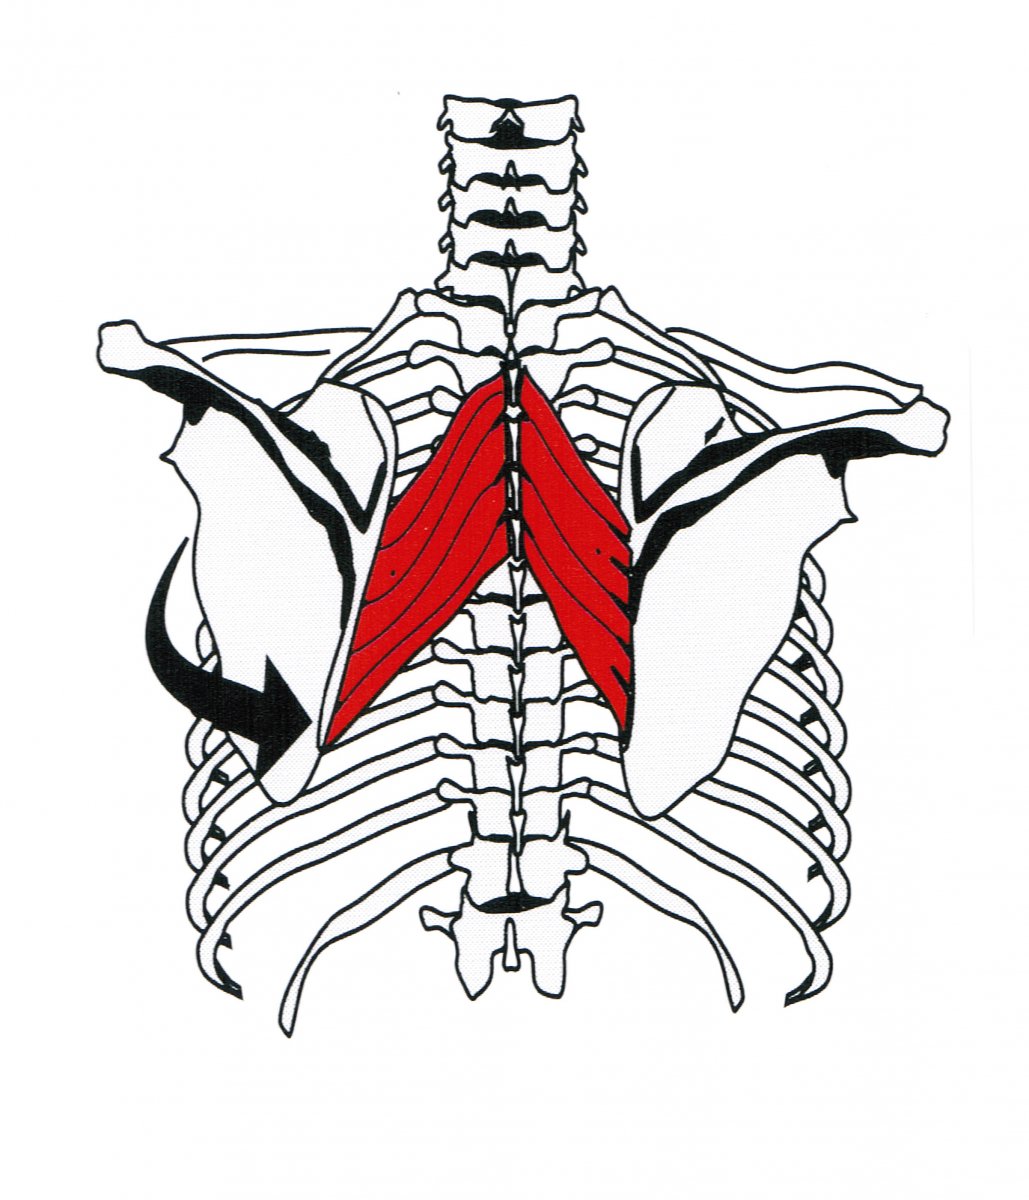 Musculus rhomboideus Major